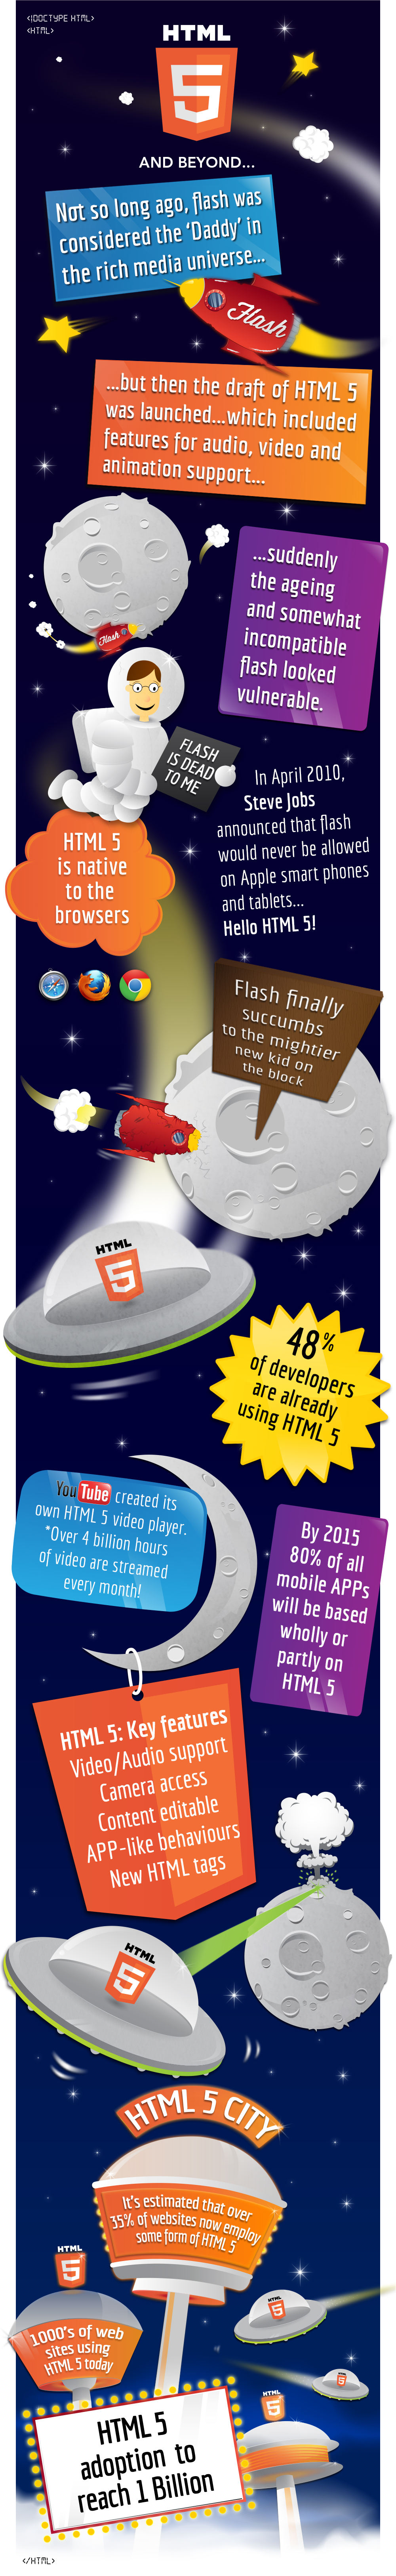 HTML 5 & Beyond